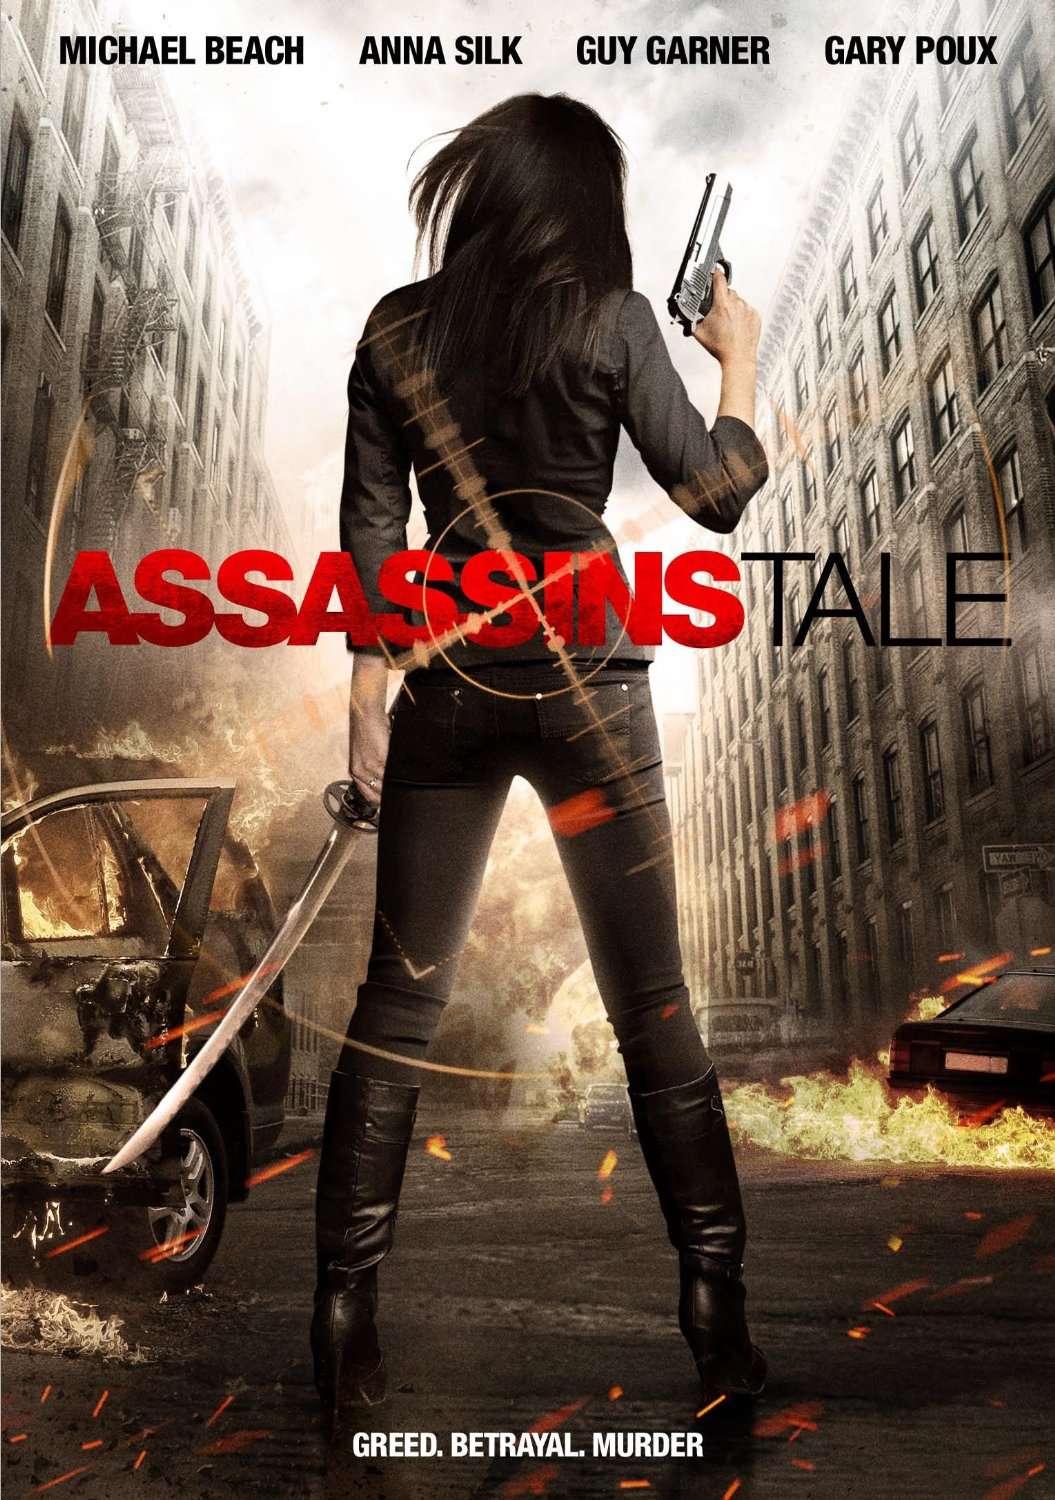 Assassins Tale - 2013 DVDRip XviD - Türkçe Altyazılı indir